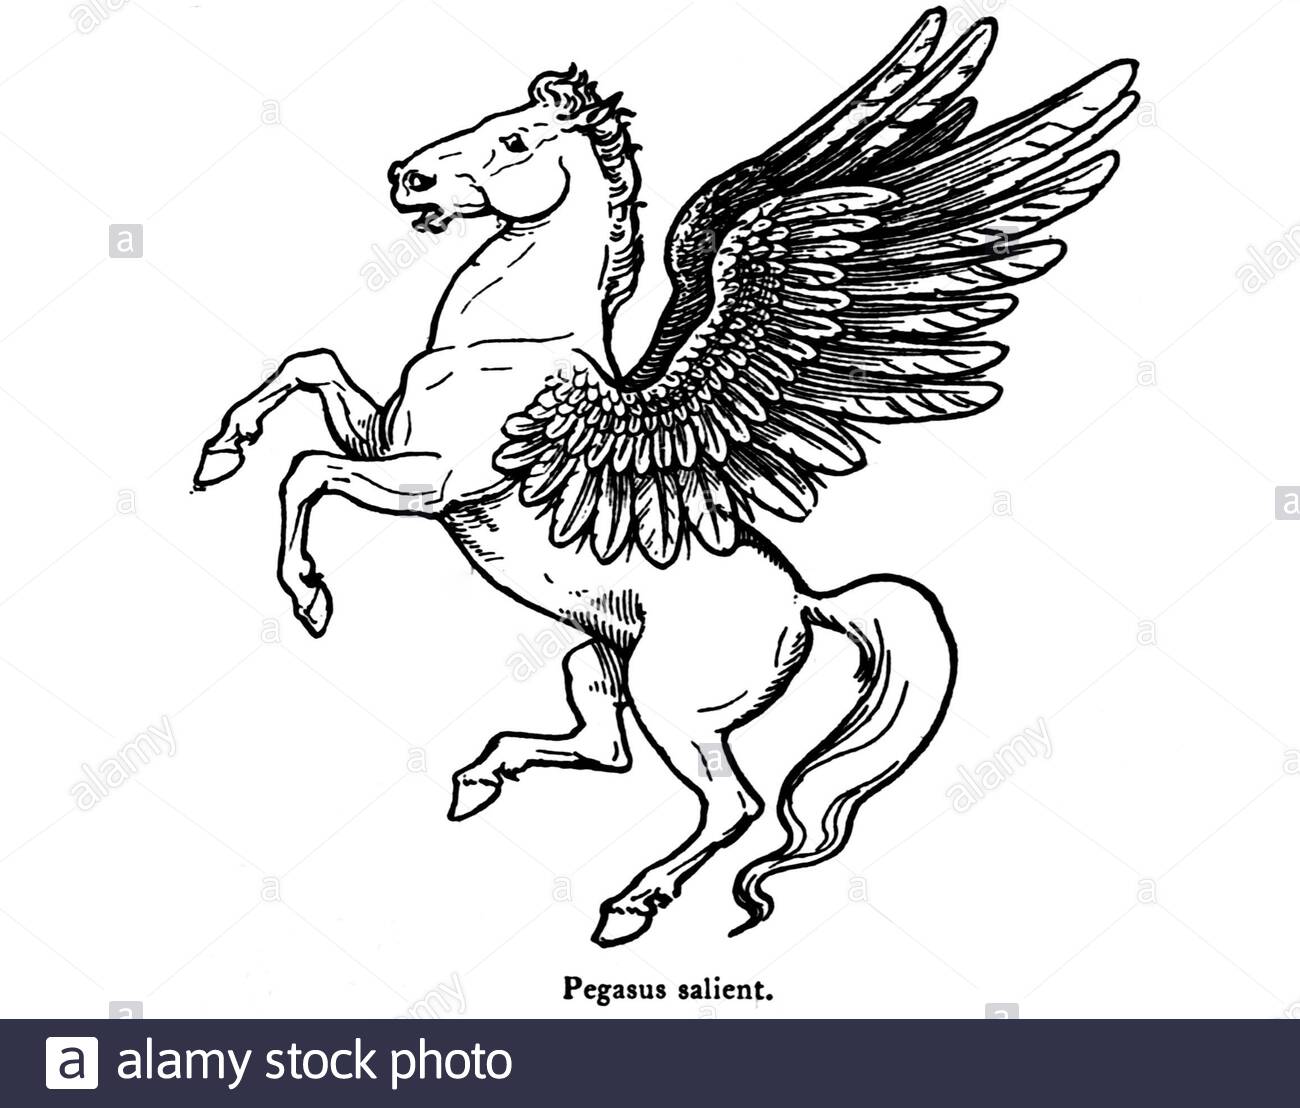 Pegasus, klassische Illustration aus dem Jahr 1900 Stockfoto